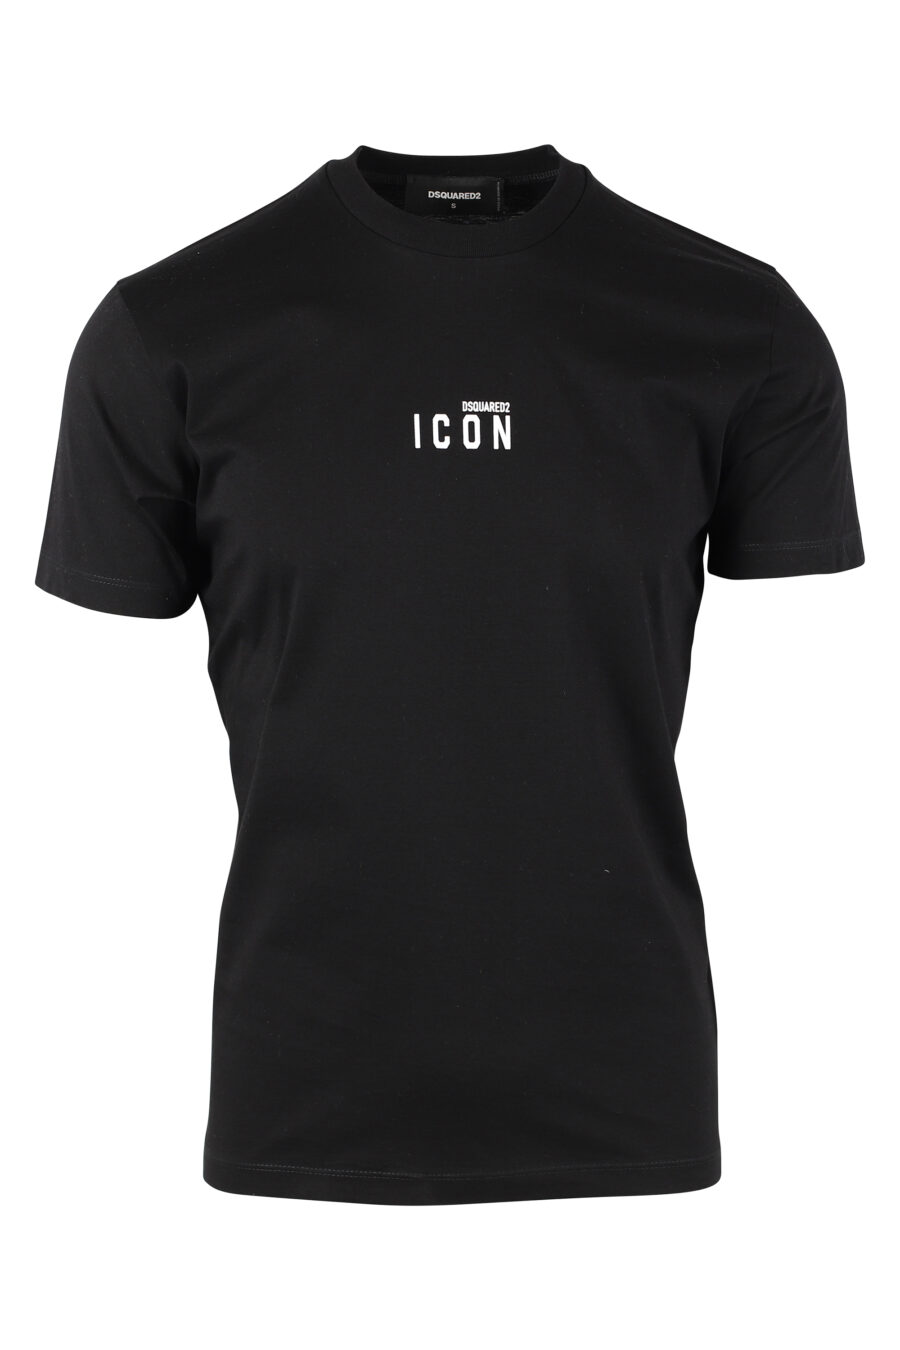 Schwarzes T-Shirt mit Minilogo "Icon" - IMG 9766